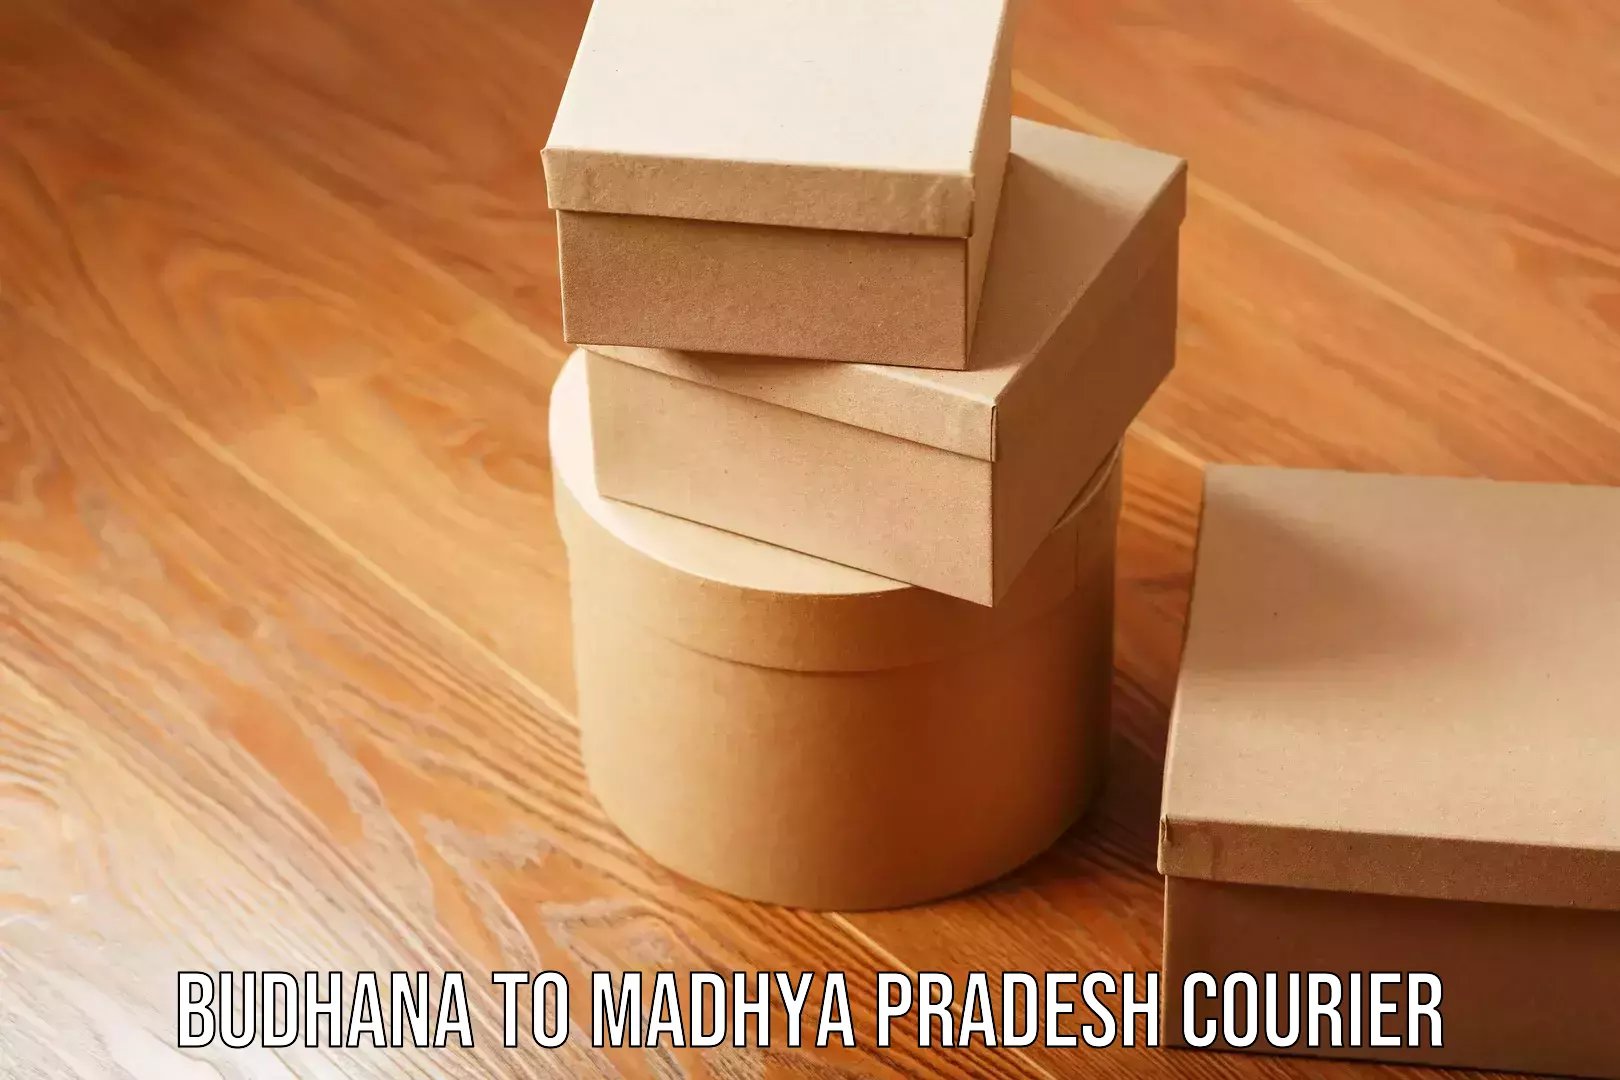 Global courier networks Budhana to Madhya Pradesh